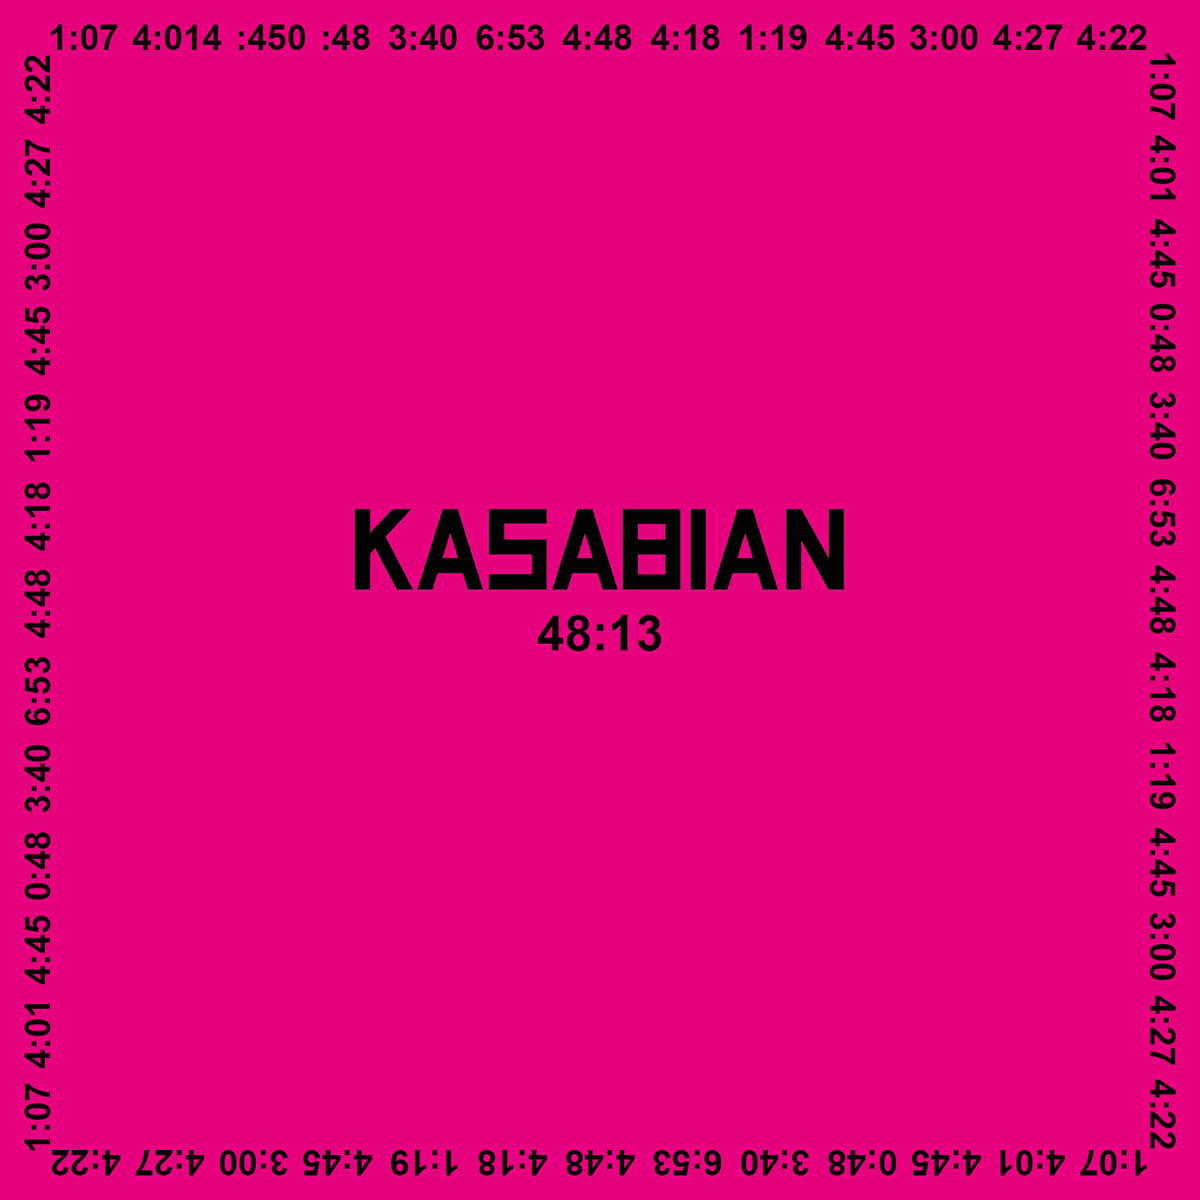 Kasabian 48:13 CD Cover on Behance